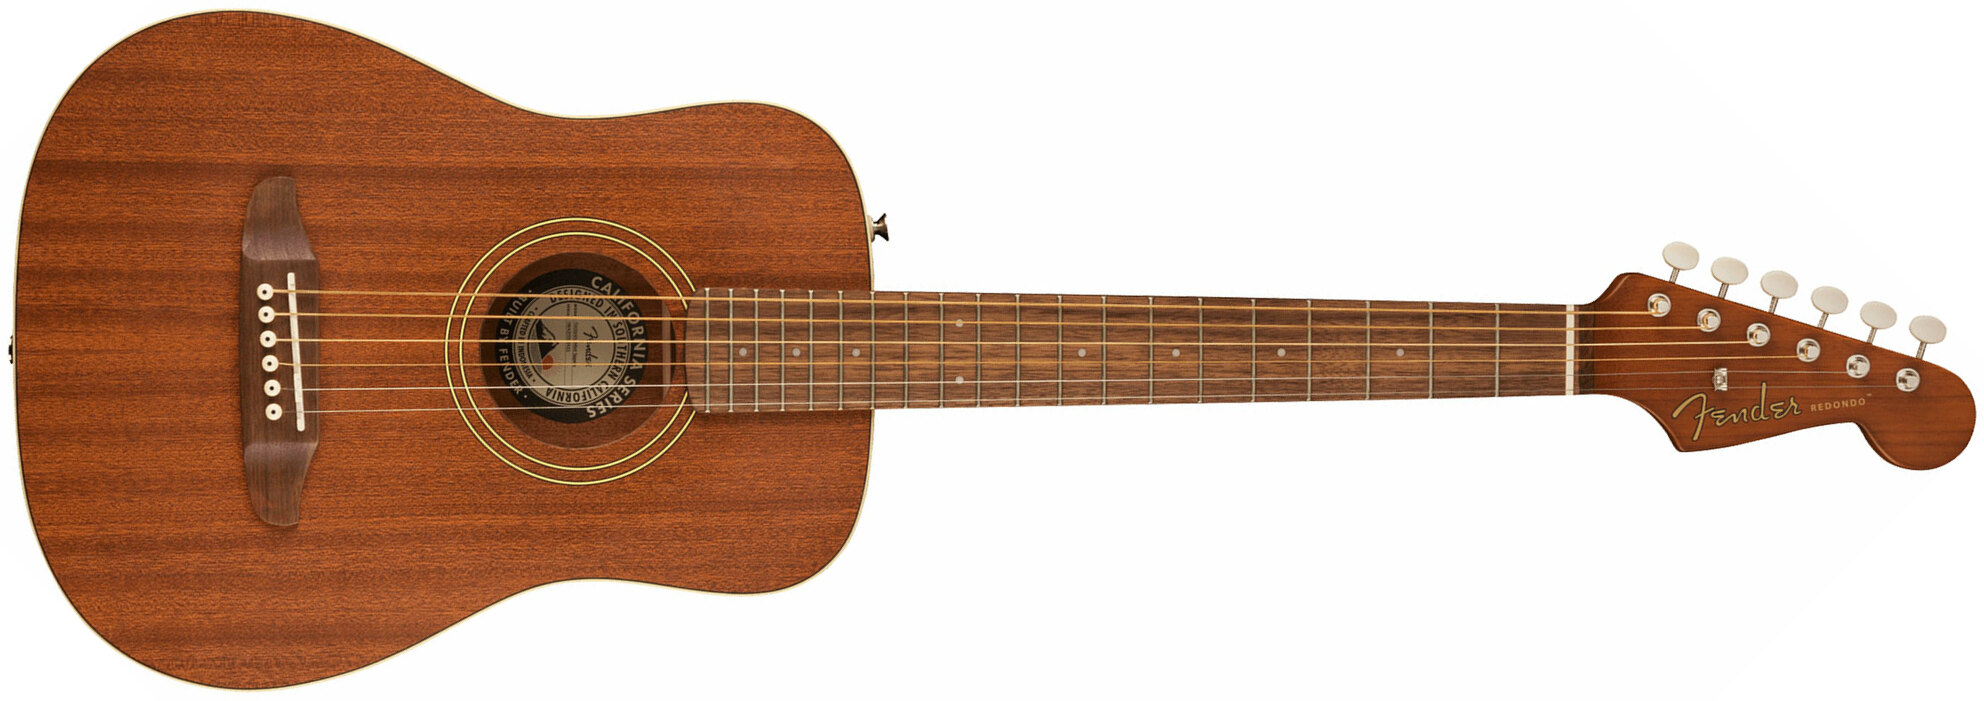 Fender Redondo Mini All Mahogany California Ltd Dreadnought 1/2 Tout Acajou Noy - Natural Satin - Travel acoustic guitar - Main picture